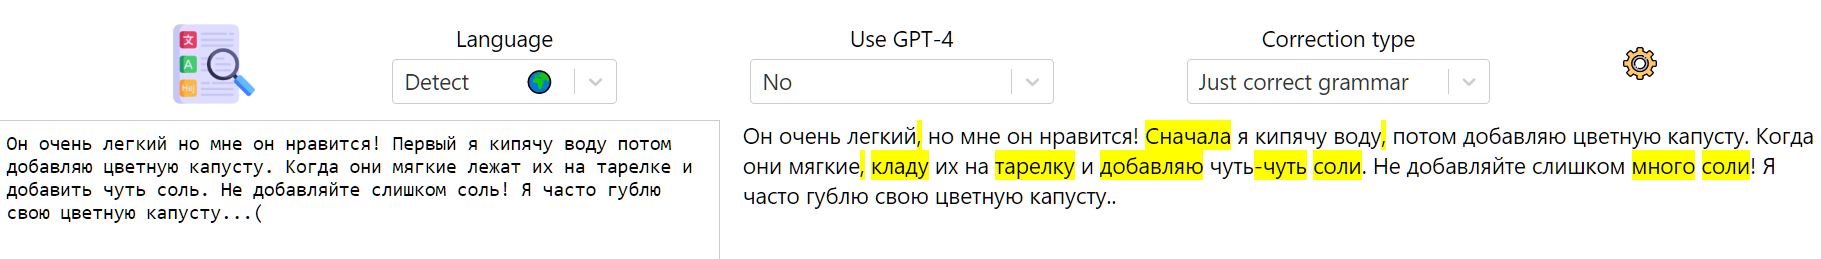 GPT-3.5 не исправила "их" → "её"